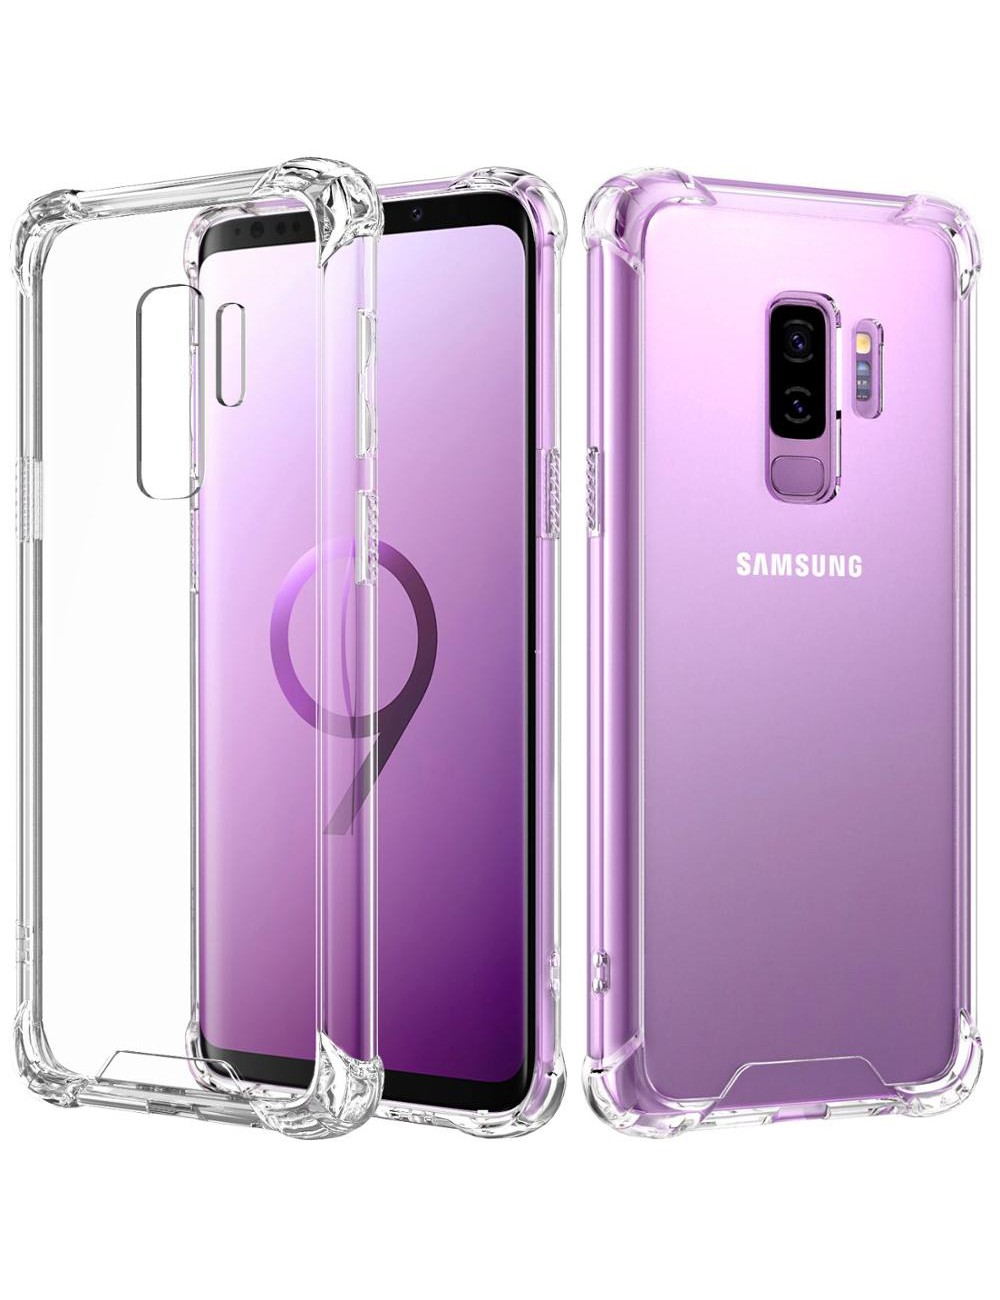 Zeker Zelfgenoegzaamheid kin Samsung Galaxy S9 Plus anti shock transparent TPU hoesje